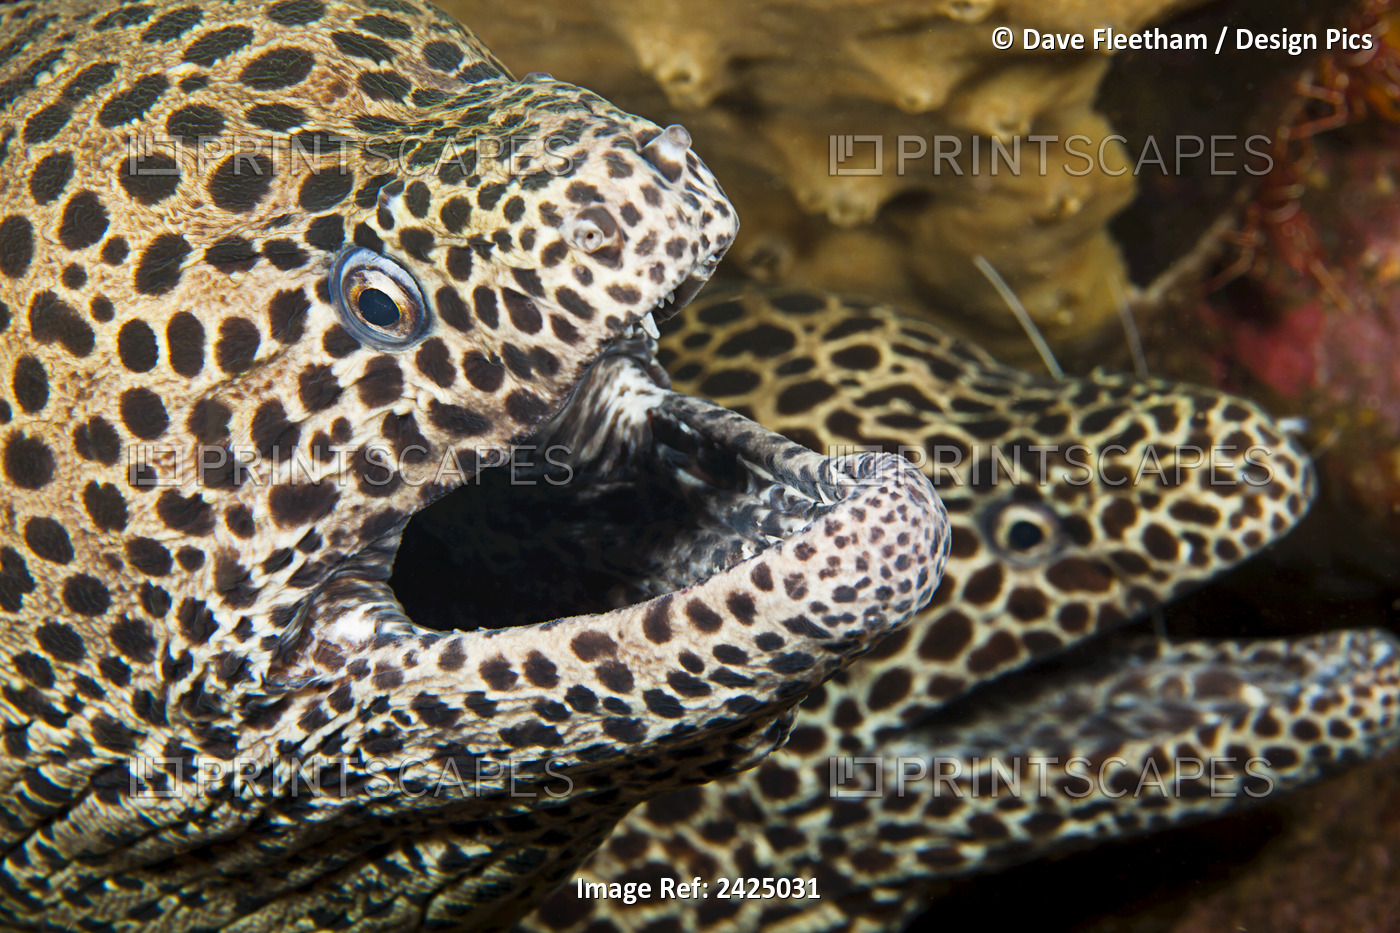 Indonesia, Bali, A Pair Of Honeycomb Moray Eels (Gymnothorax Favageneus).